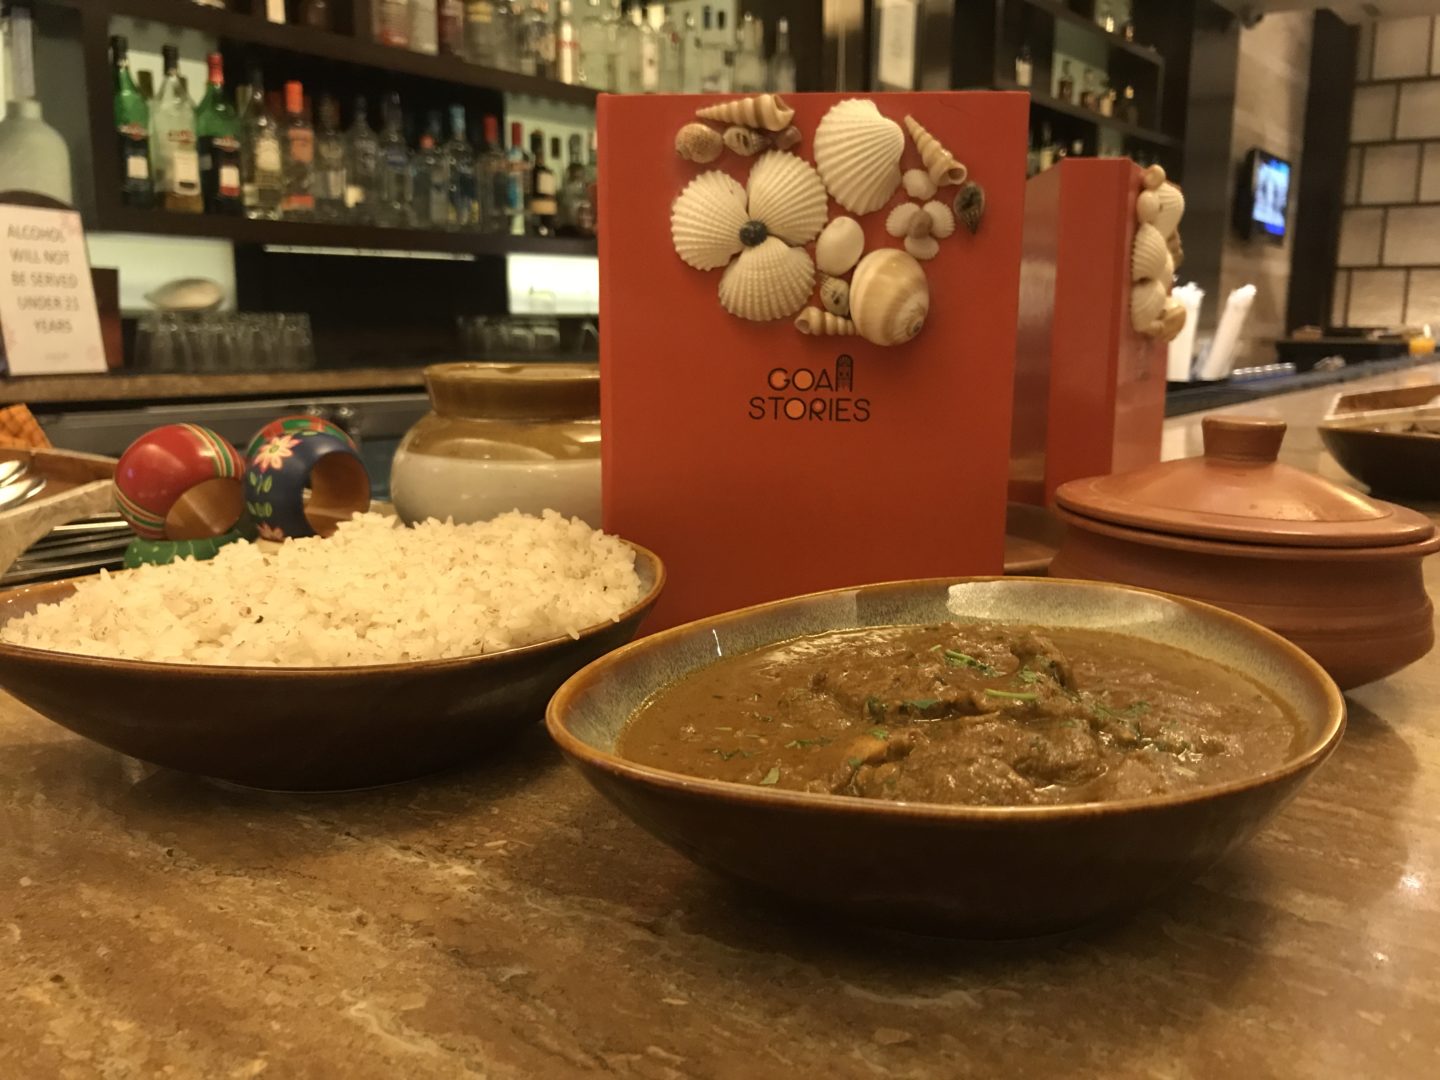 Goan Stories at Vivanta by Taj, Goa – A tale of authentic Goan cuisine